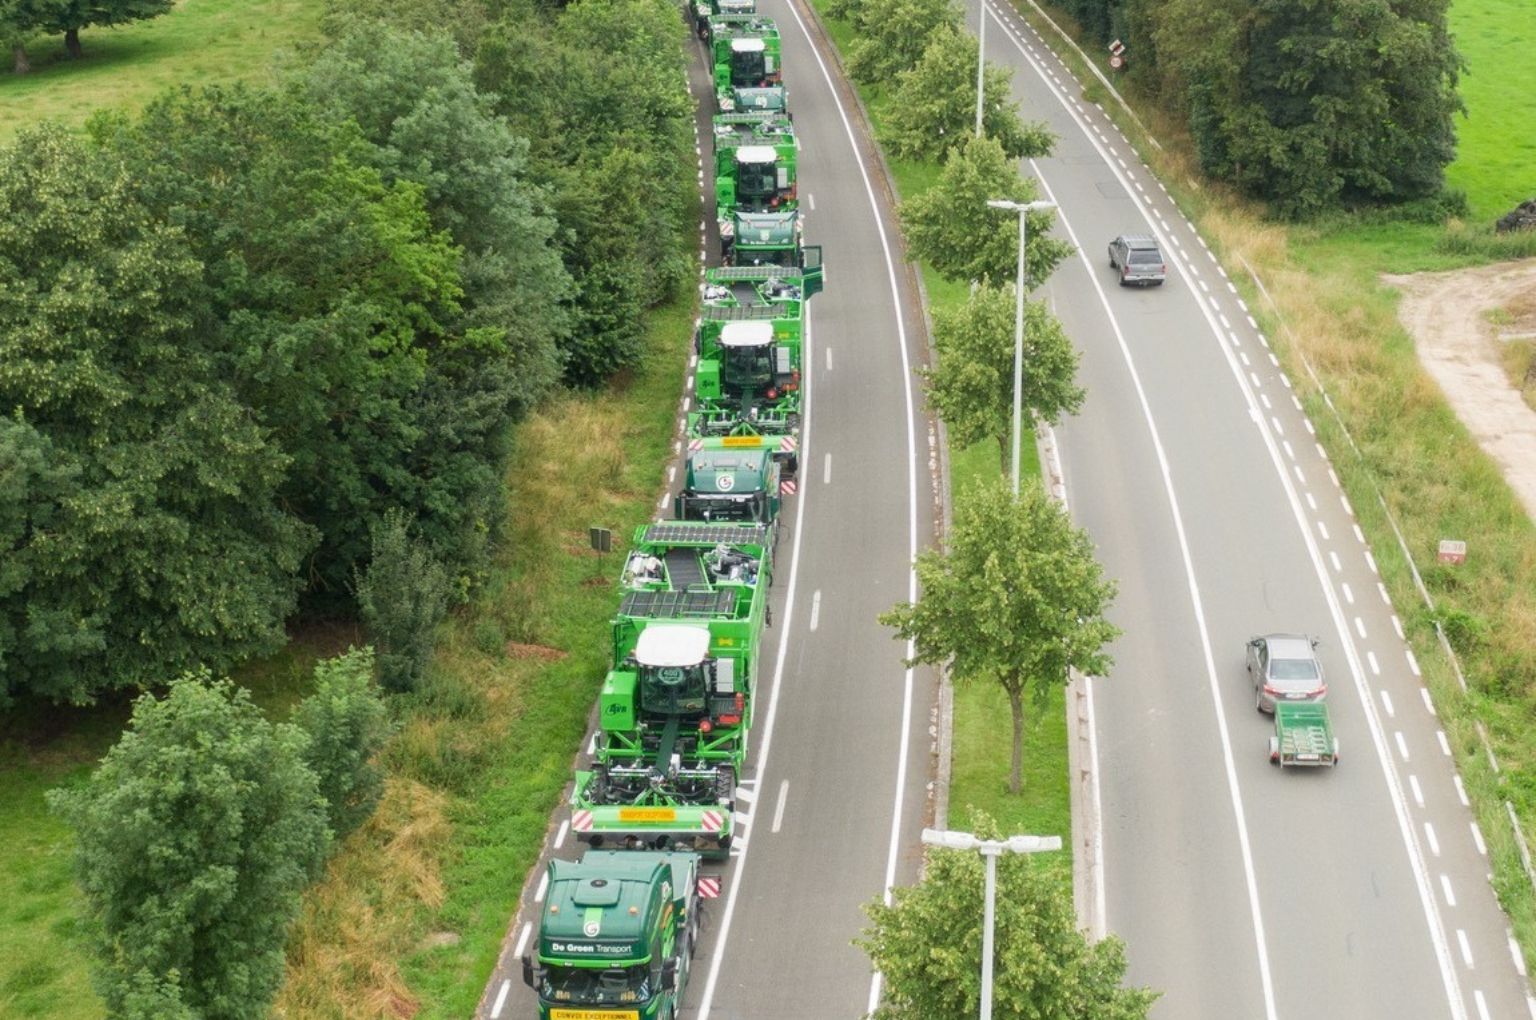 AVR convoy from Belgium to Denmark